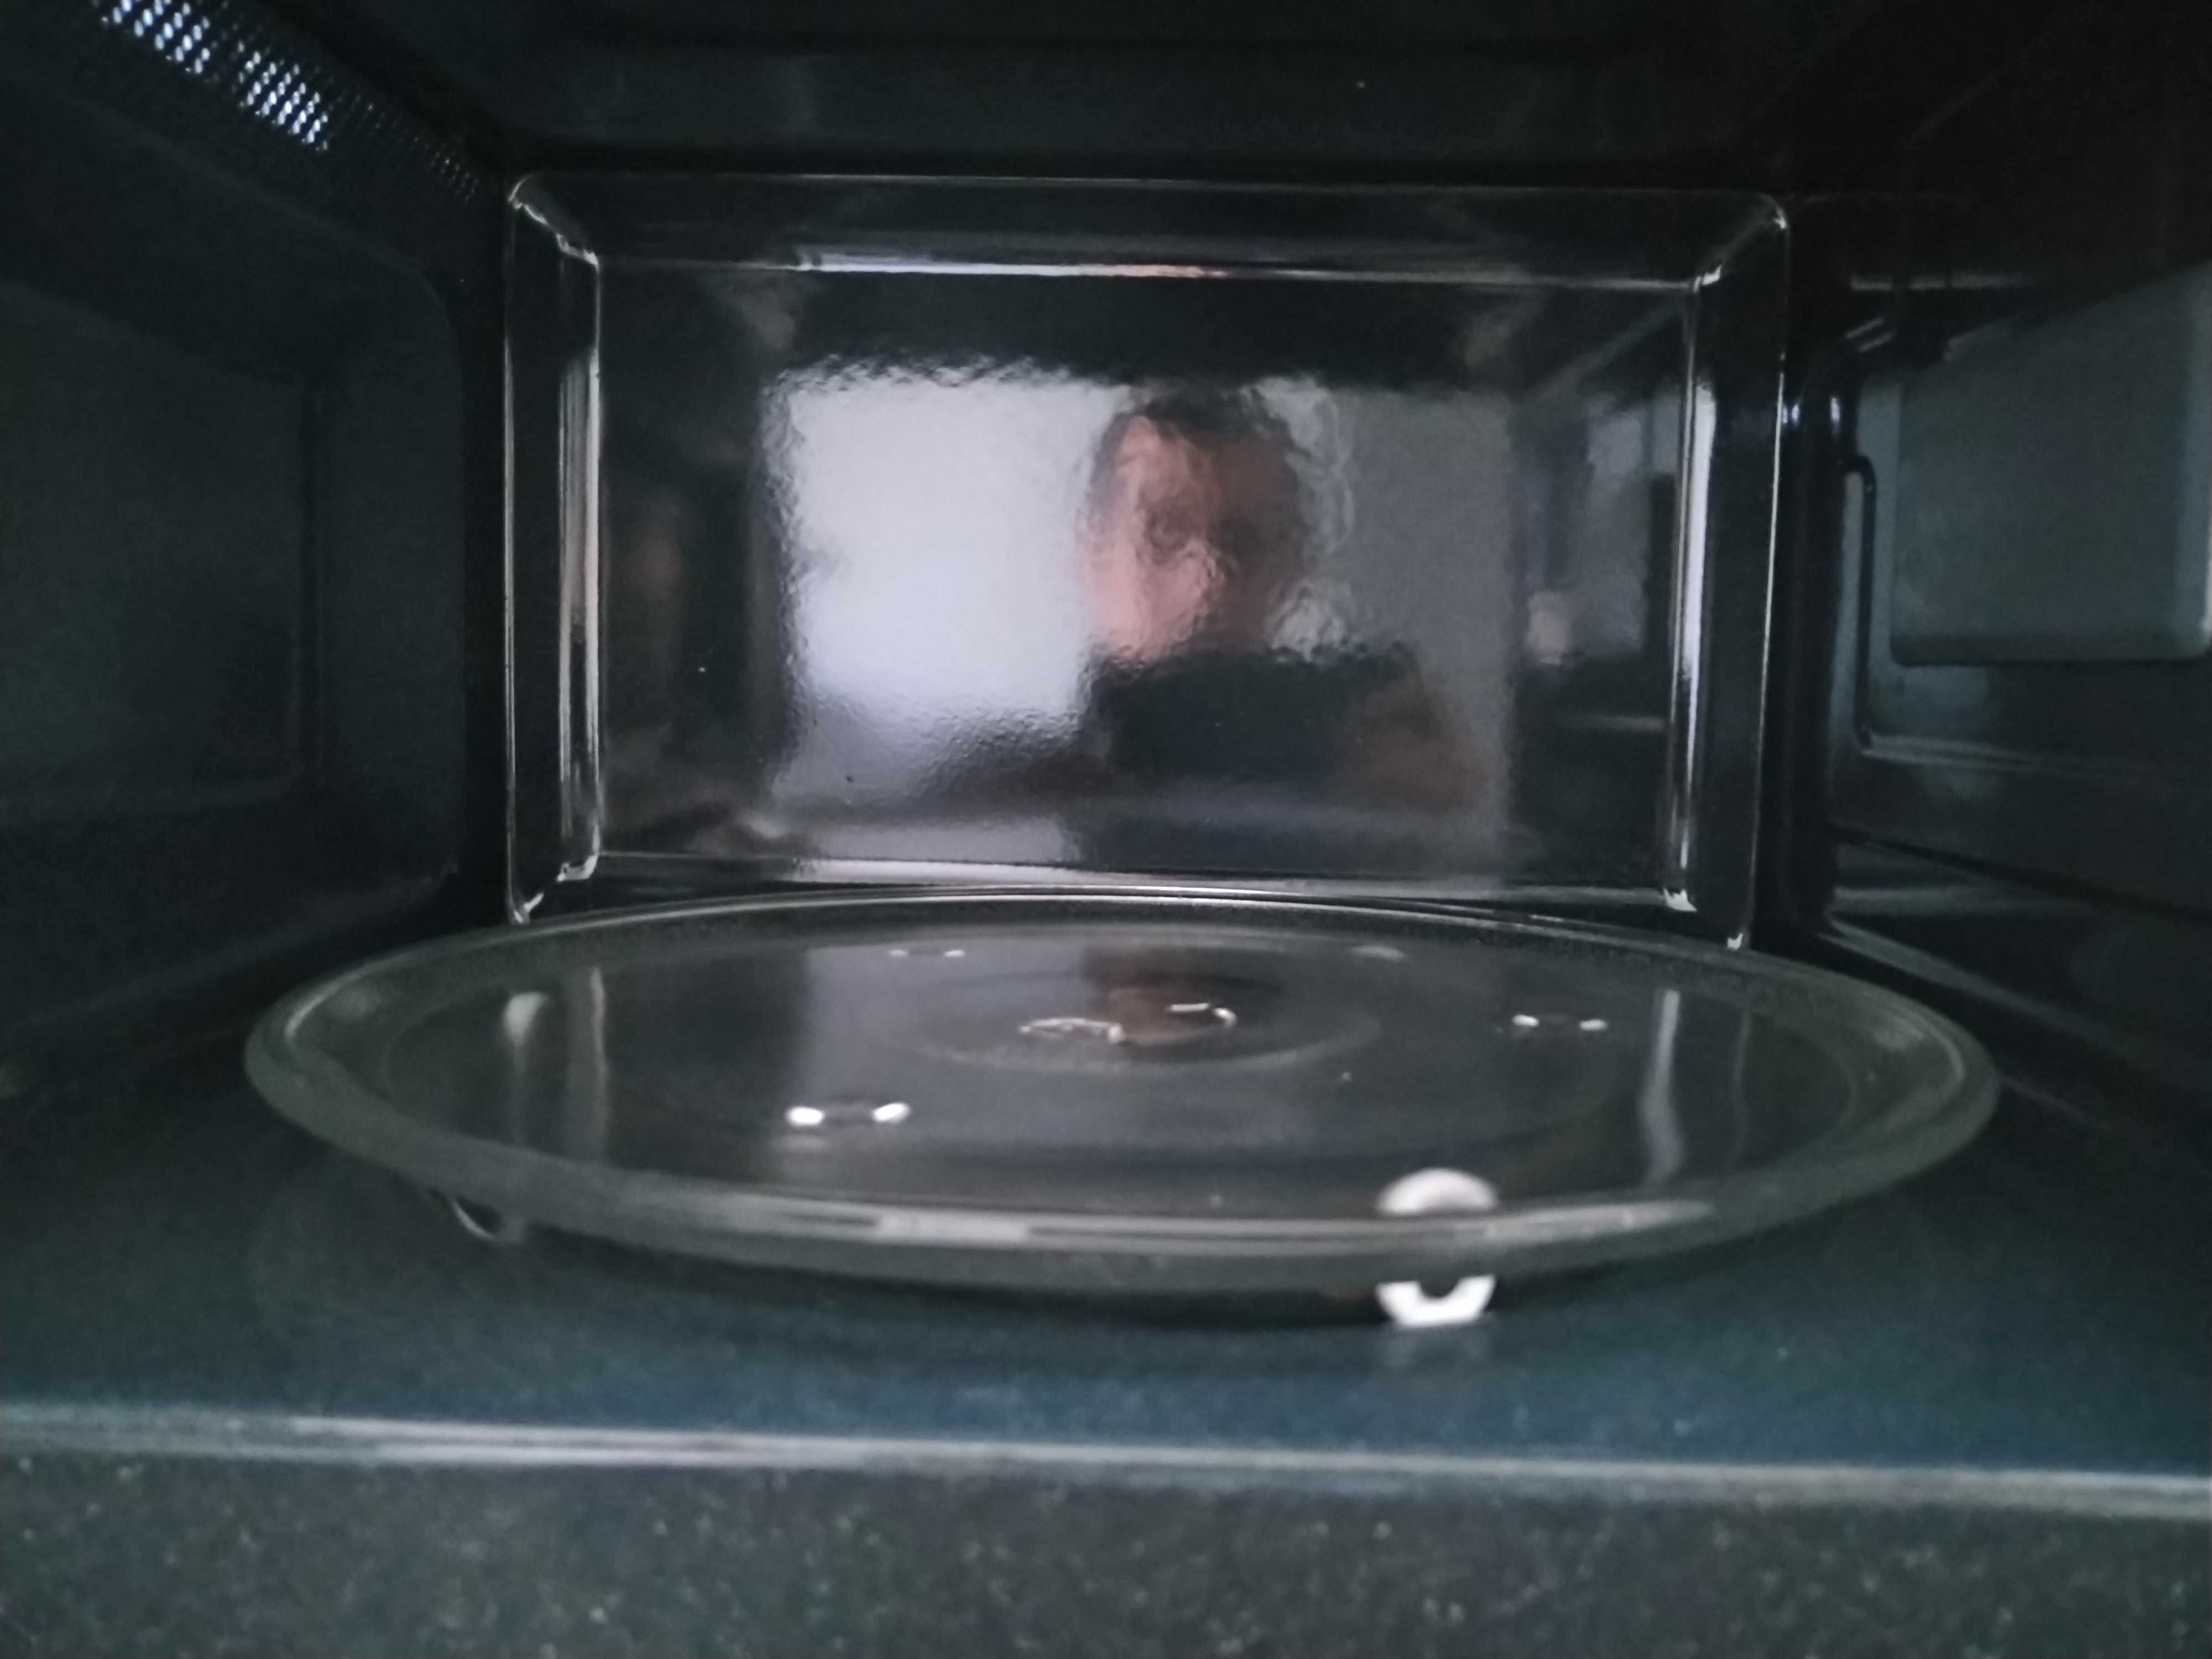 Микровълнова печка Samsung